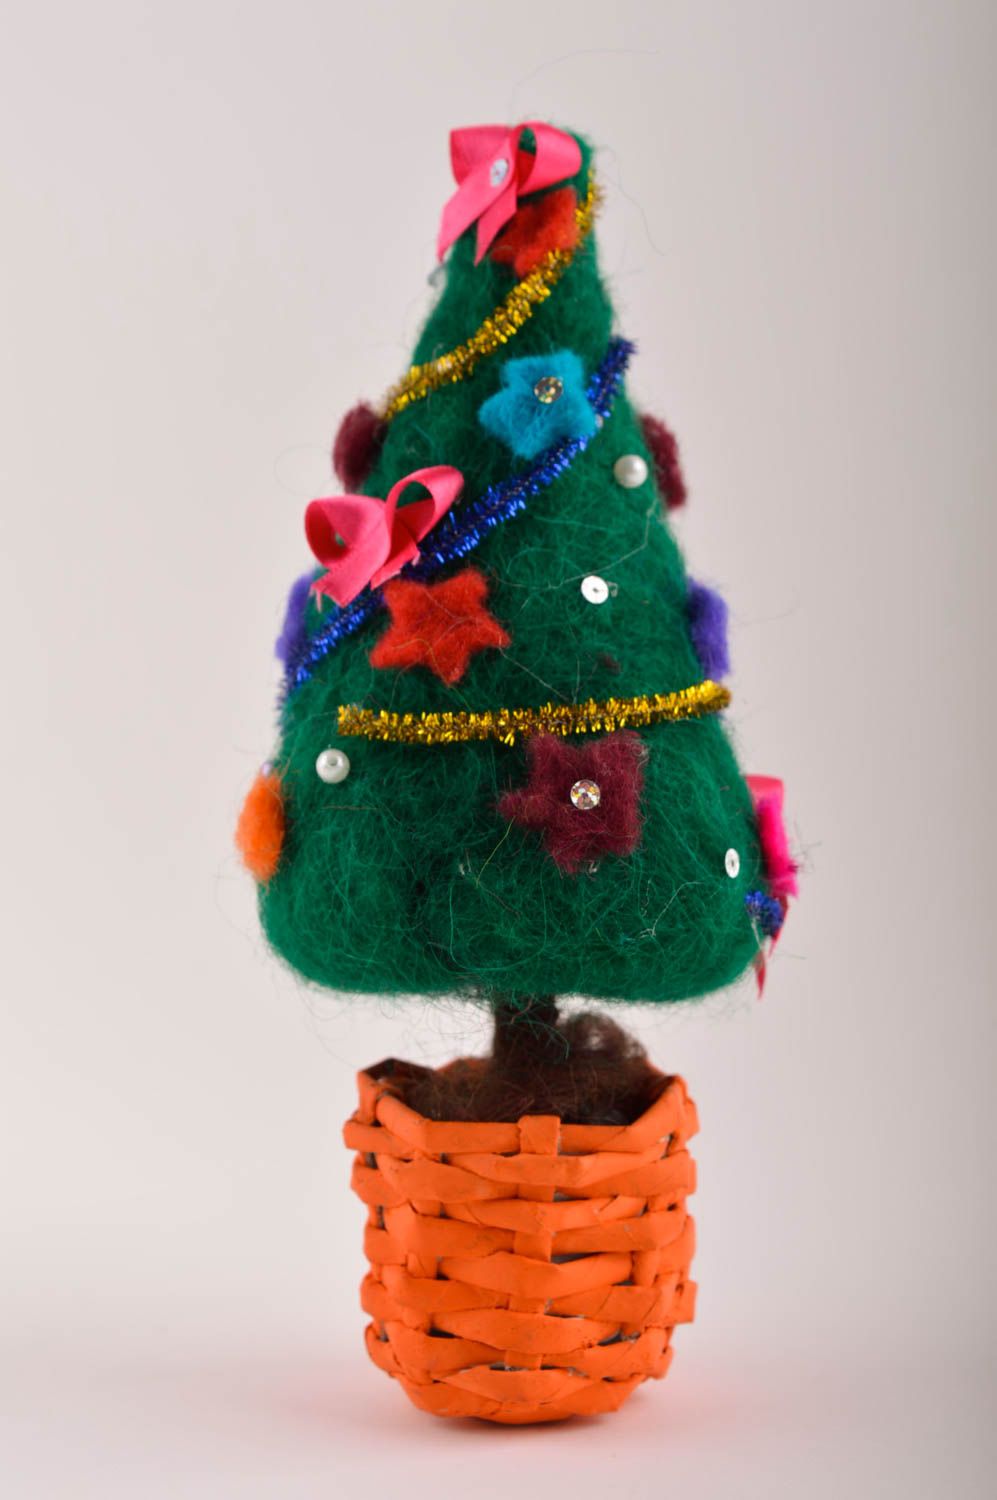 Homemade home decor fake Christmas tree for decorative use only Christmas gift photo 2